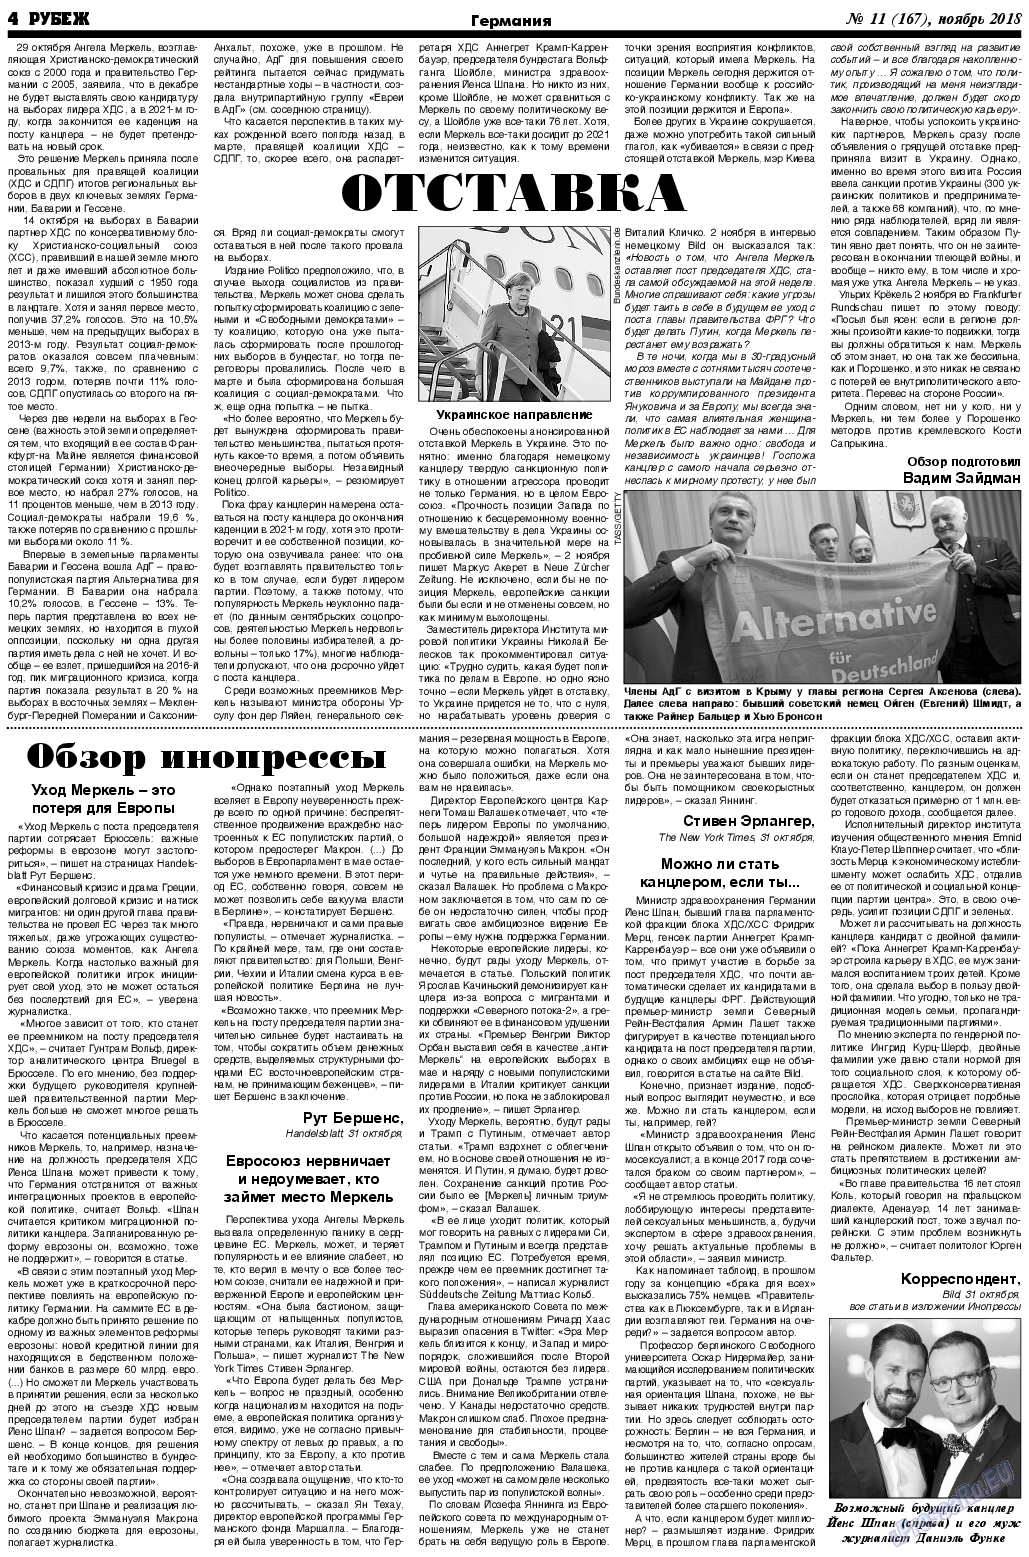 Рубеж, газета. 2018 №11 стр.4